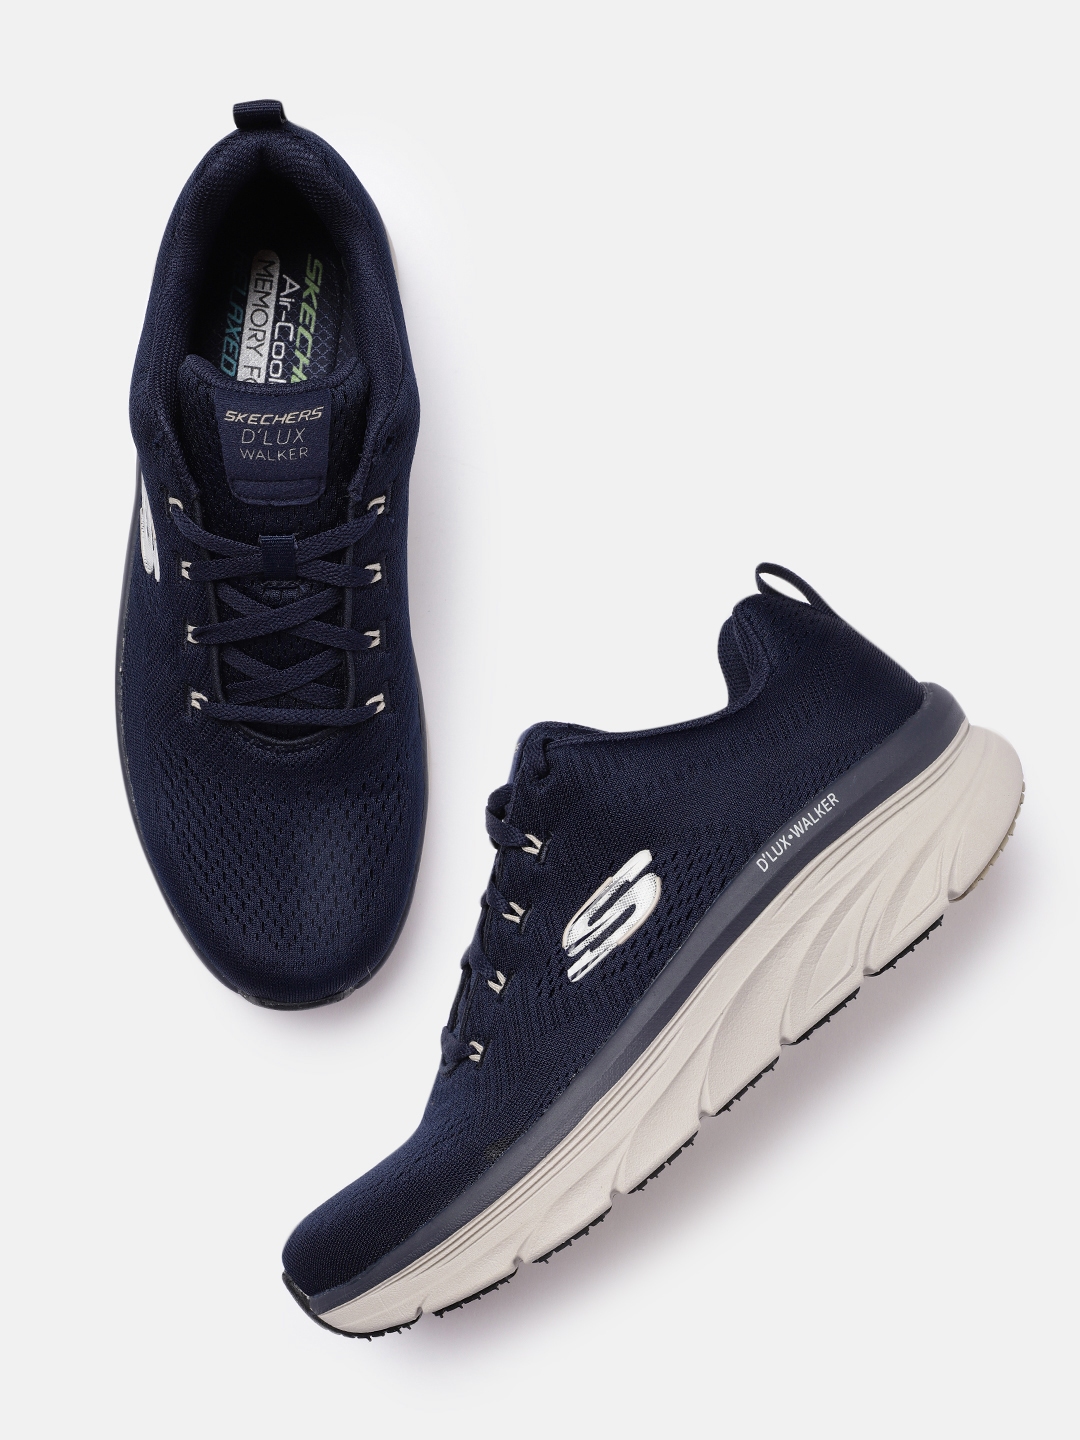 Buy Skechers Men Navy Blue D'LUX WALKER MEERNO Sneakers - Casual Shoes ...